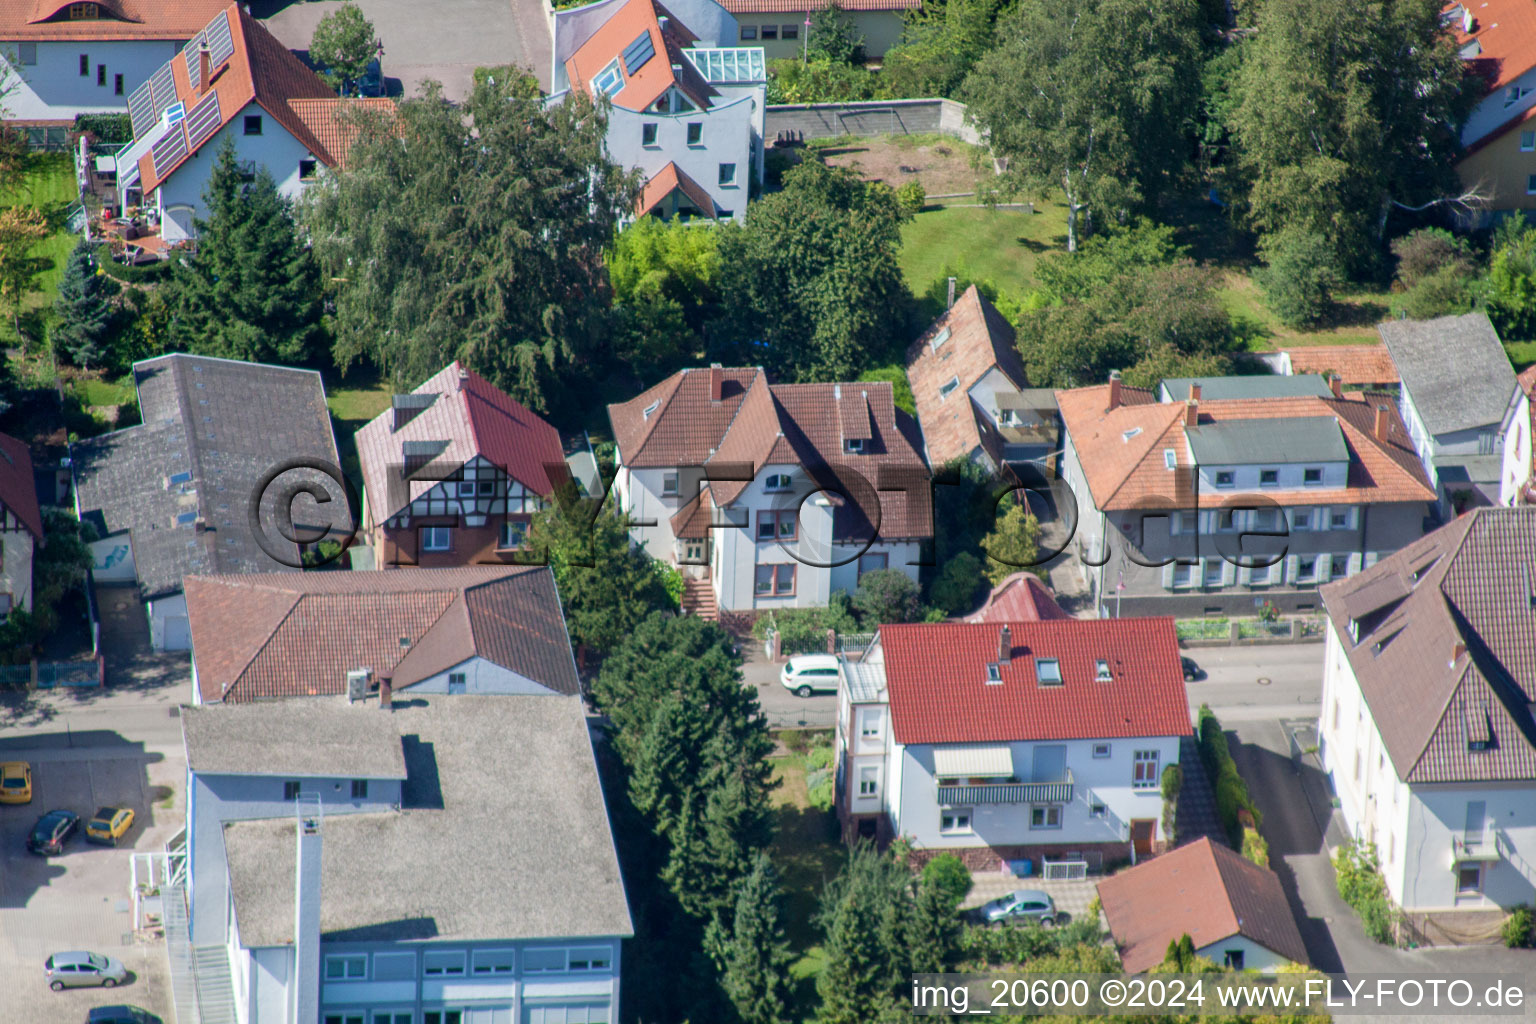 Aerial view of Bismarckstr in Kandel in the state Rhineland-Palatinate, Germany